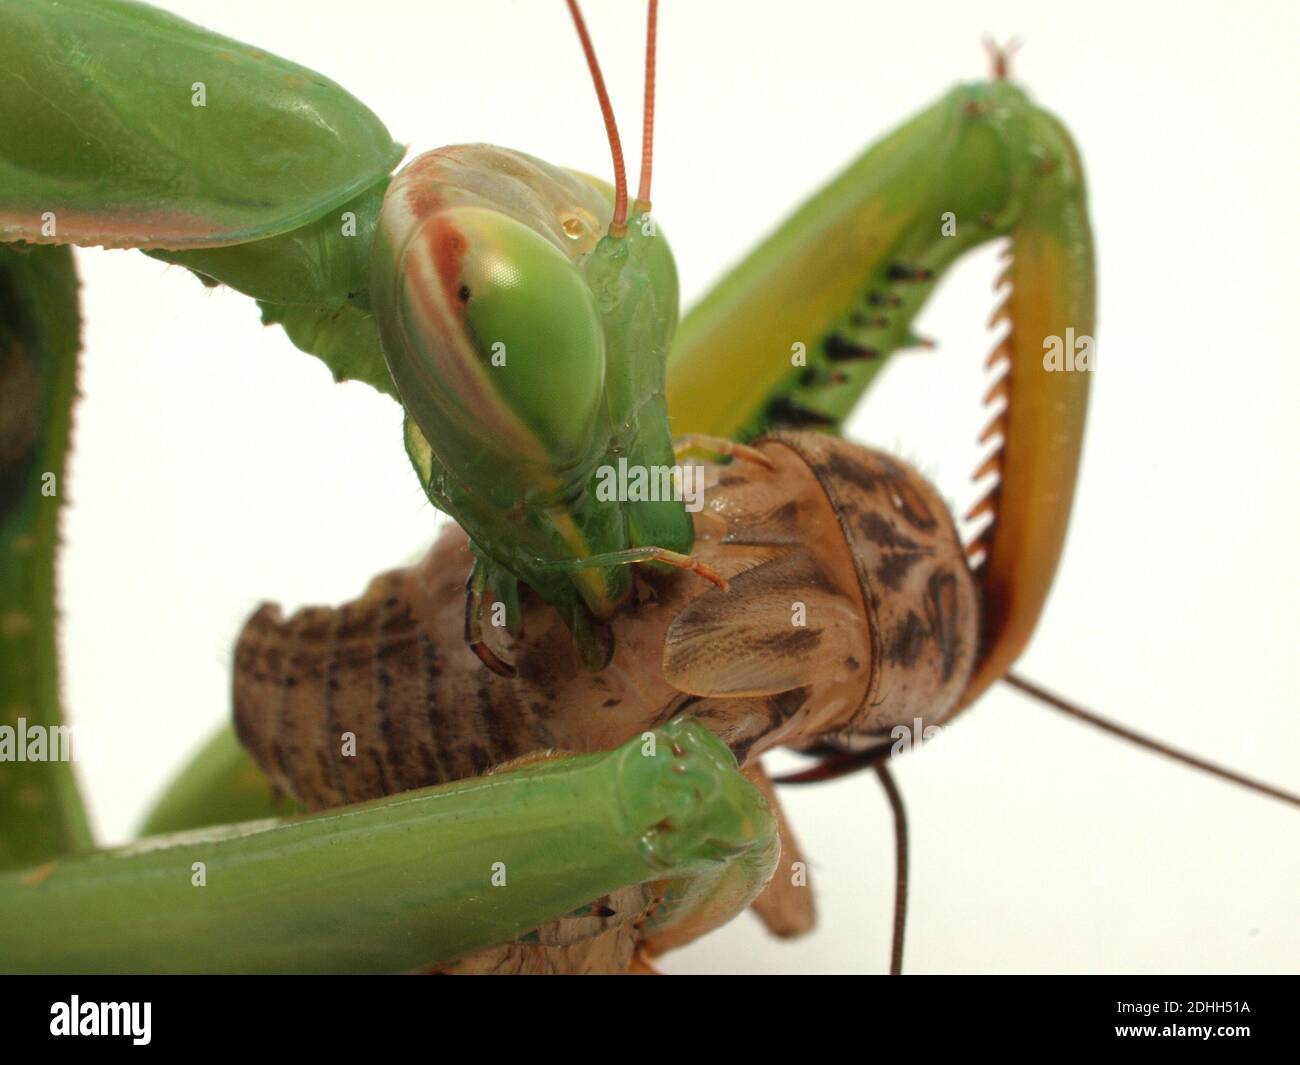 Close-up of a European praying mantis (Mantis religiosa) eating a house cricket (Acheta domesticus) it has captured Stock Photo